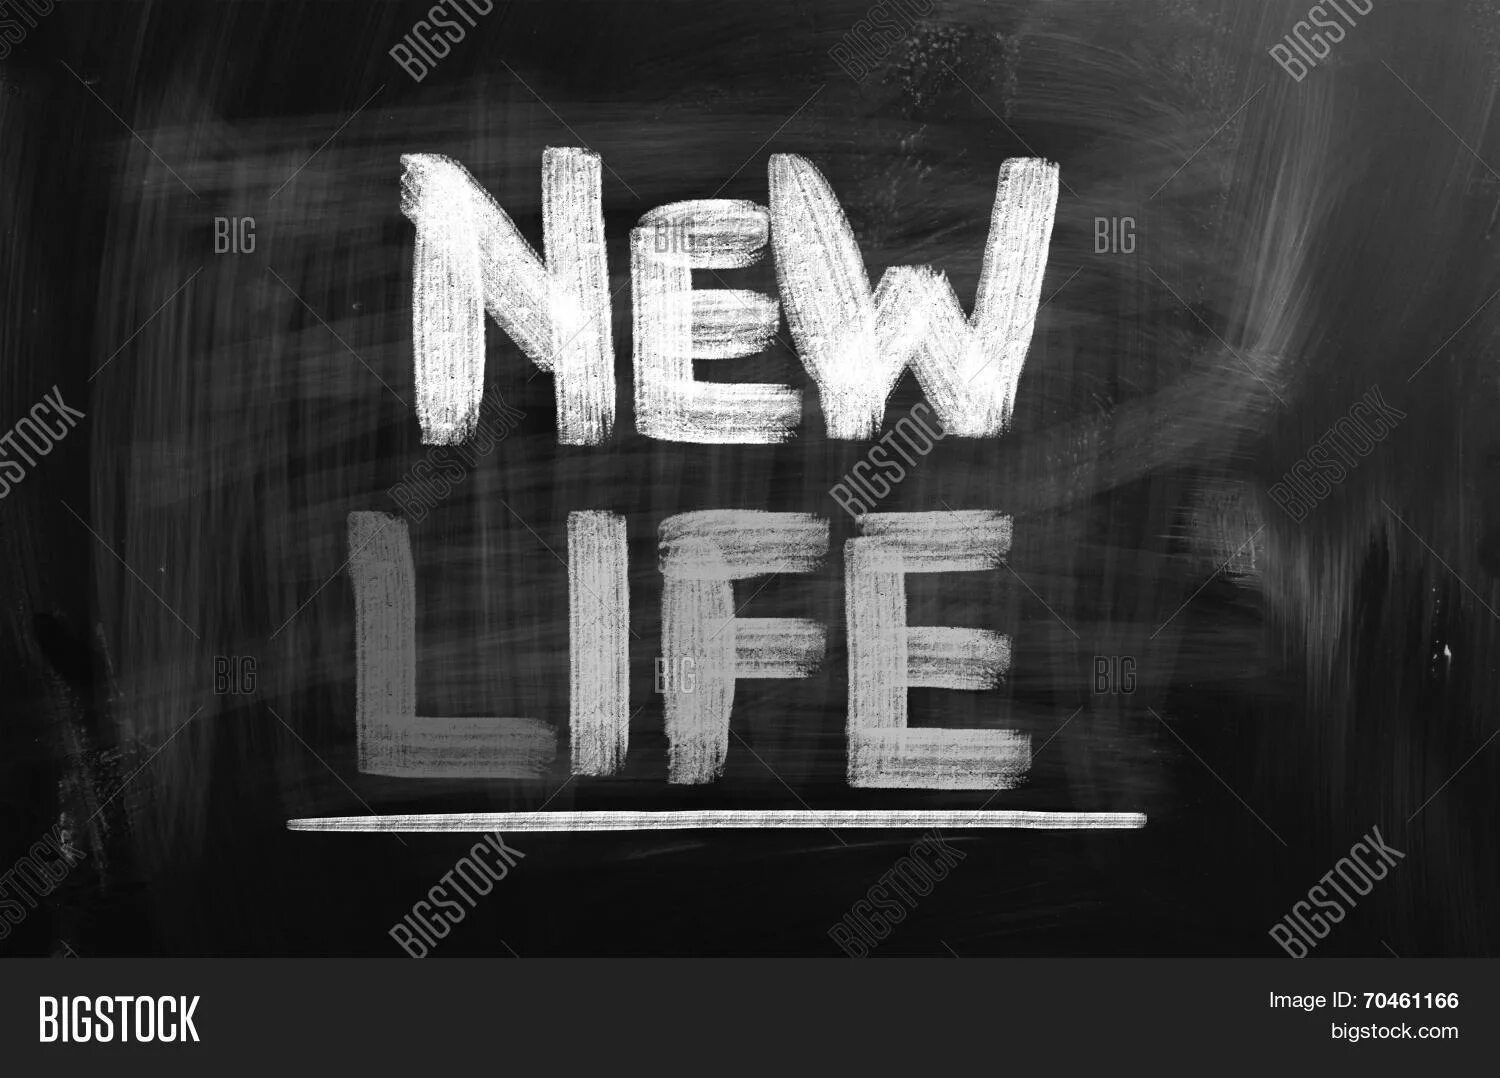 The New Life. Картинки лайф Нью. Happy New Life картинки. Надписью New Life фото. New life на русском